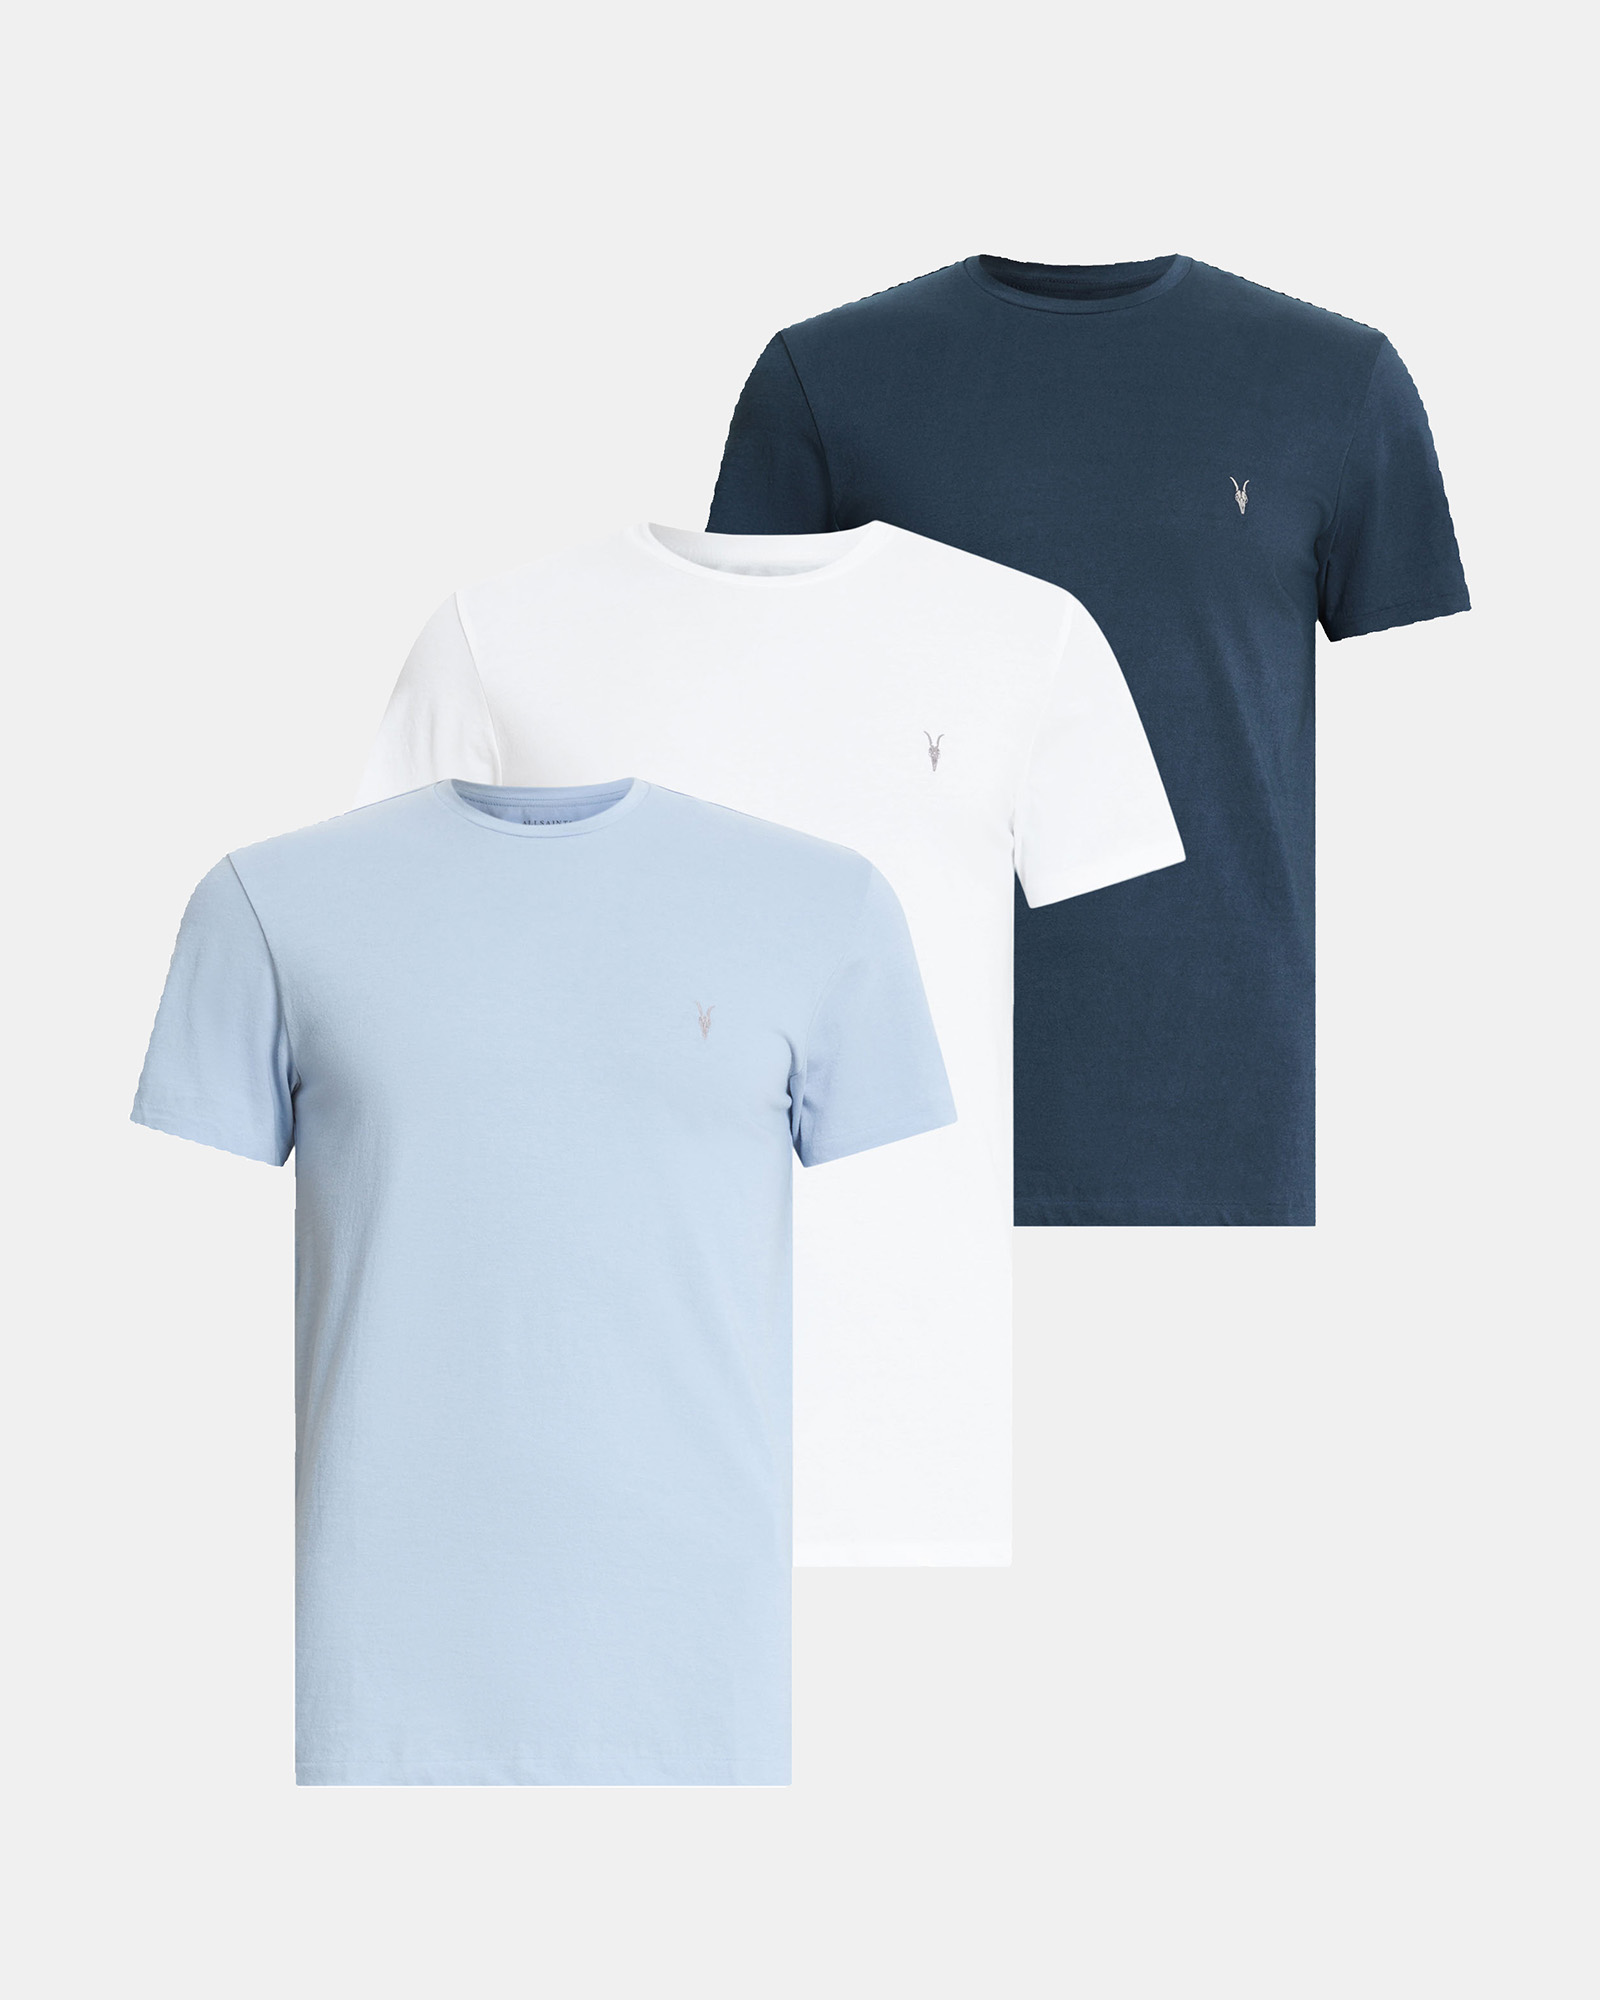 AllSaints Tonic Crew Ramskull T-Shirts 3 Pack,, BLUE/BLUE/WHITE